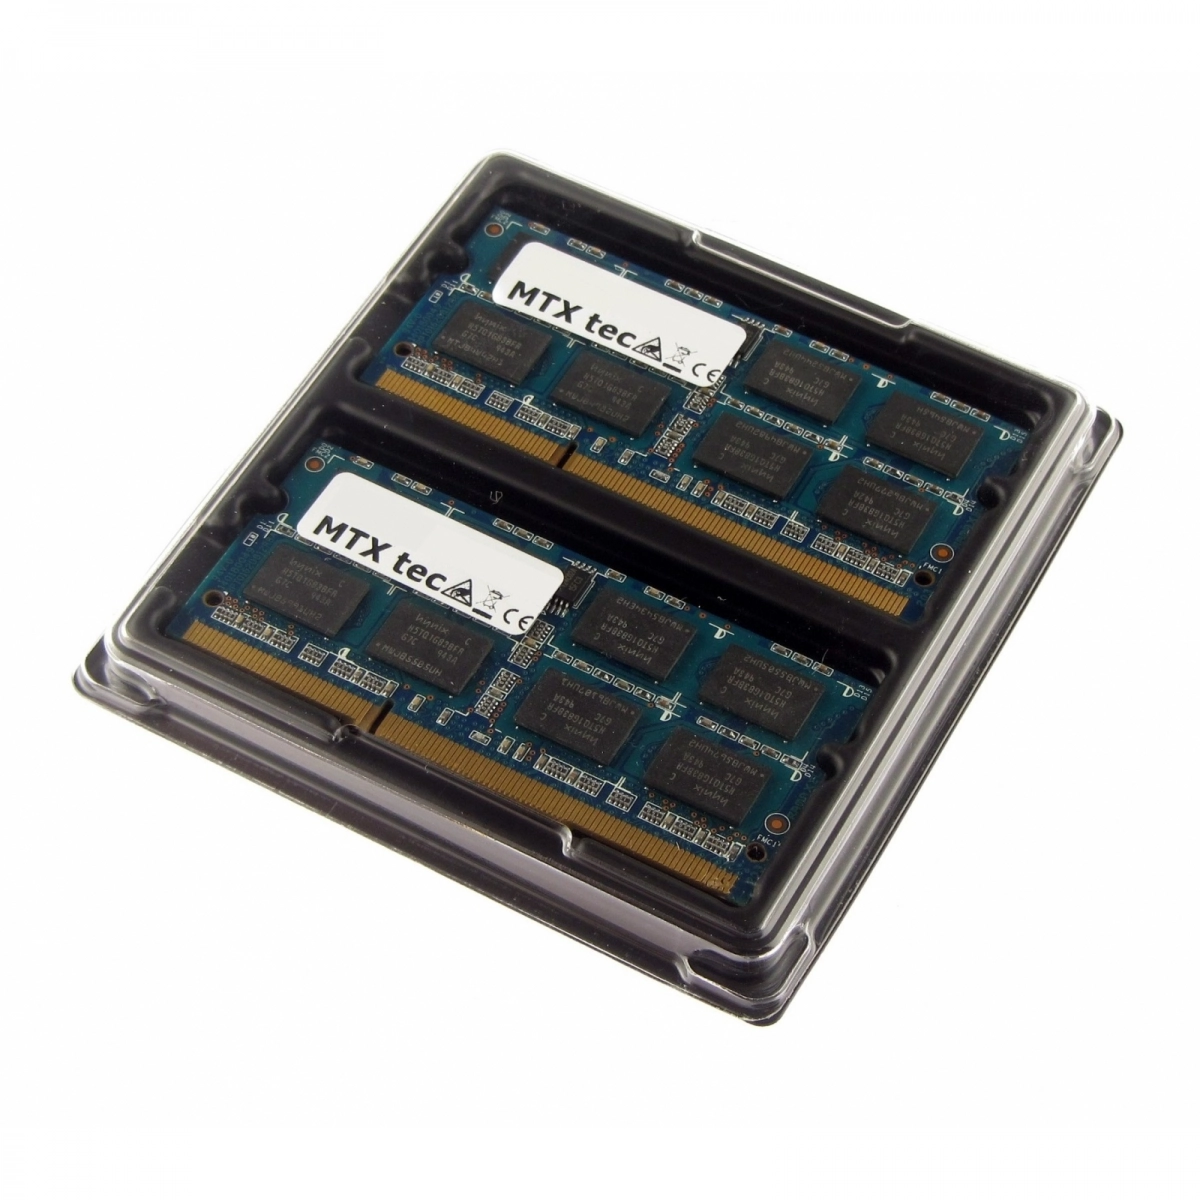 MTXtec 8GB Kit 2x 4GB DDR2 800MHz SODIMM DDR2 PC2-6400, 200 Pin RAM Laptop-Speicher